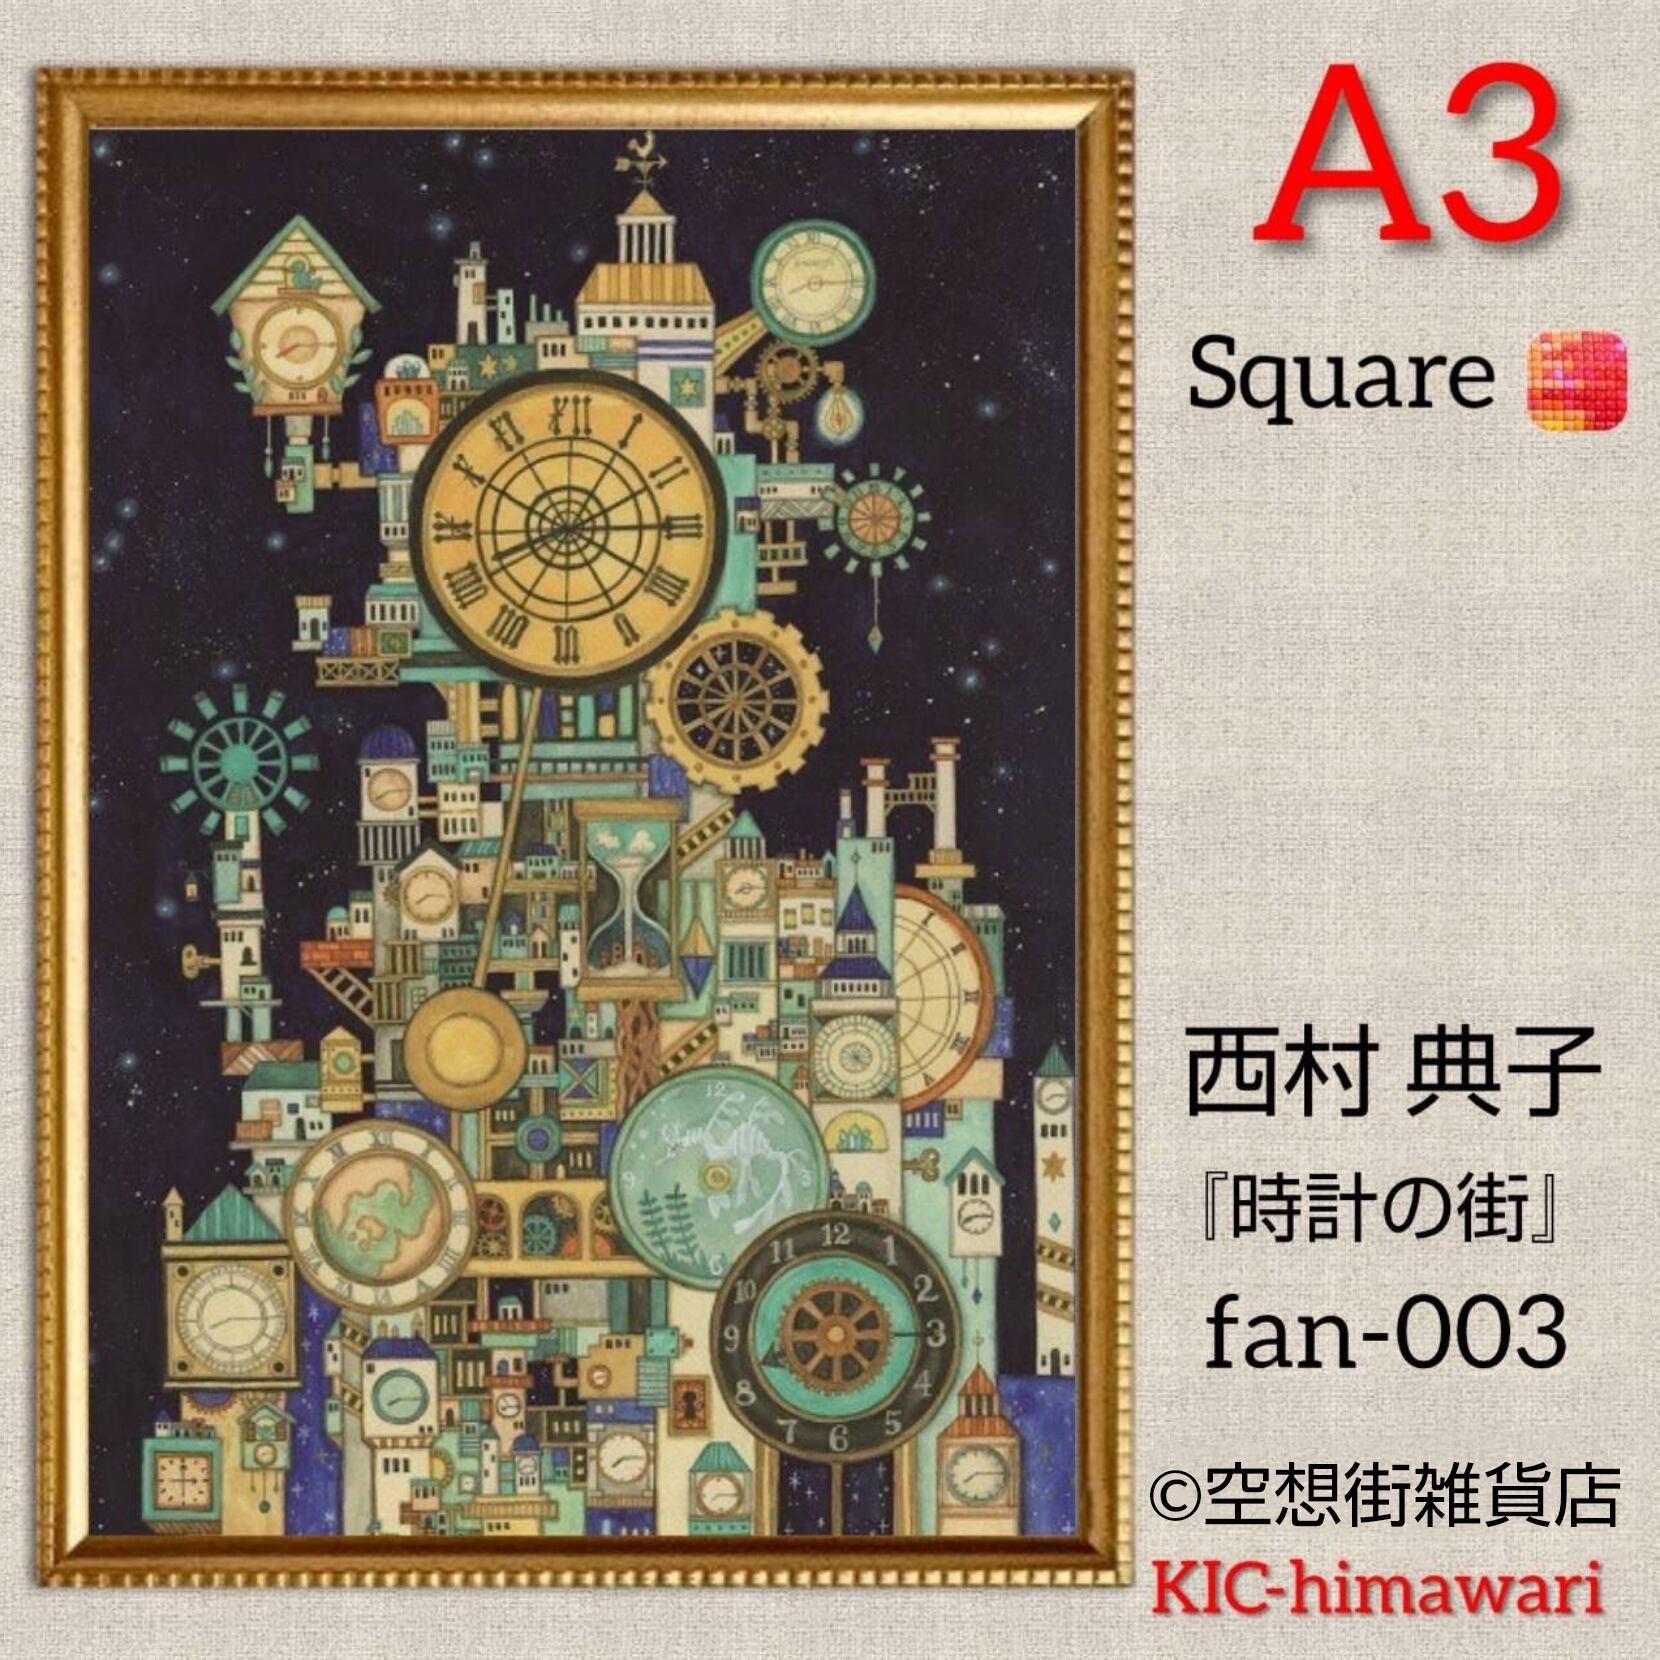 A3サイズ 四角ビーズ【fan-003】フルダイヤモンドアート